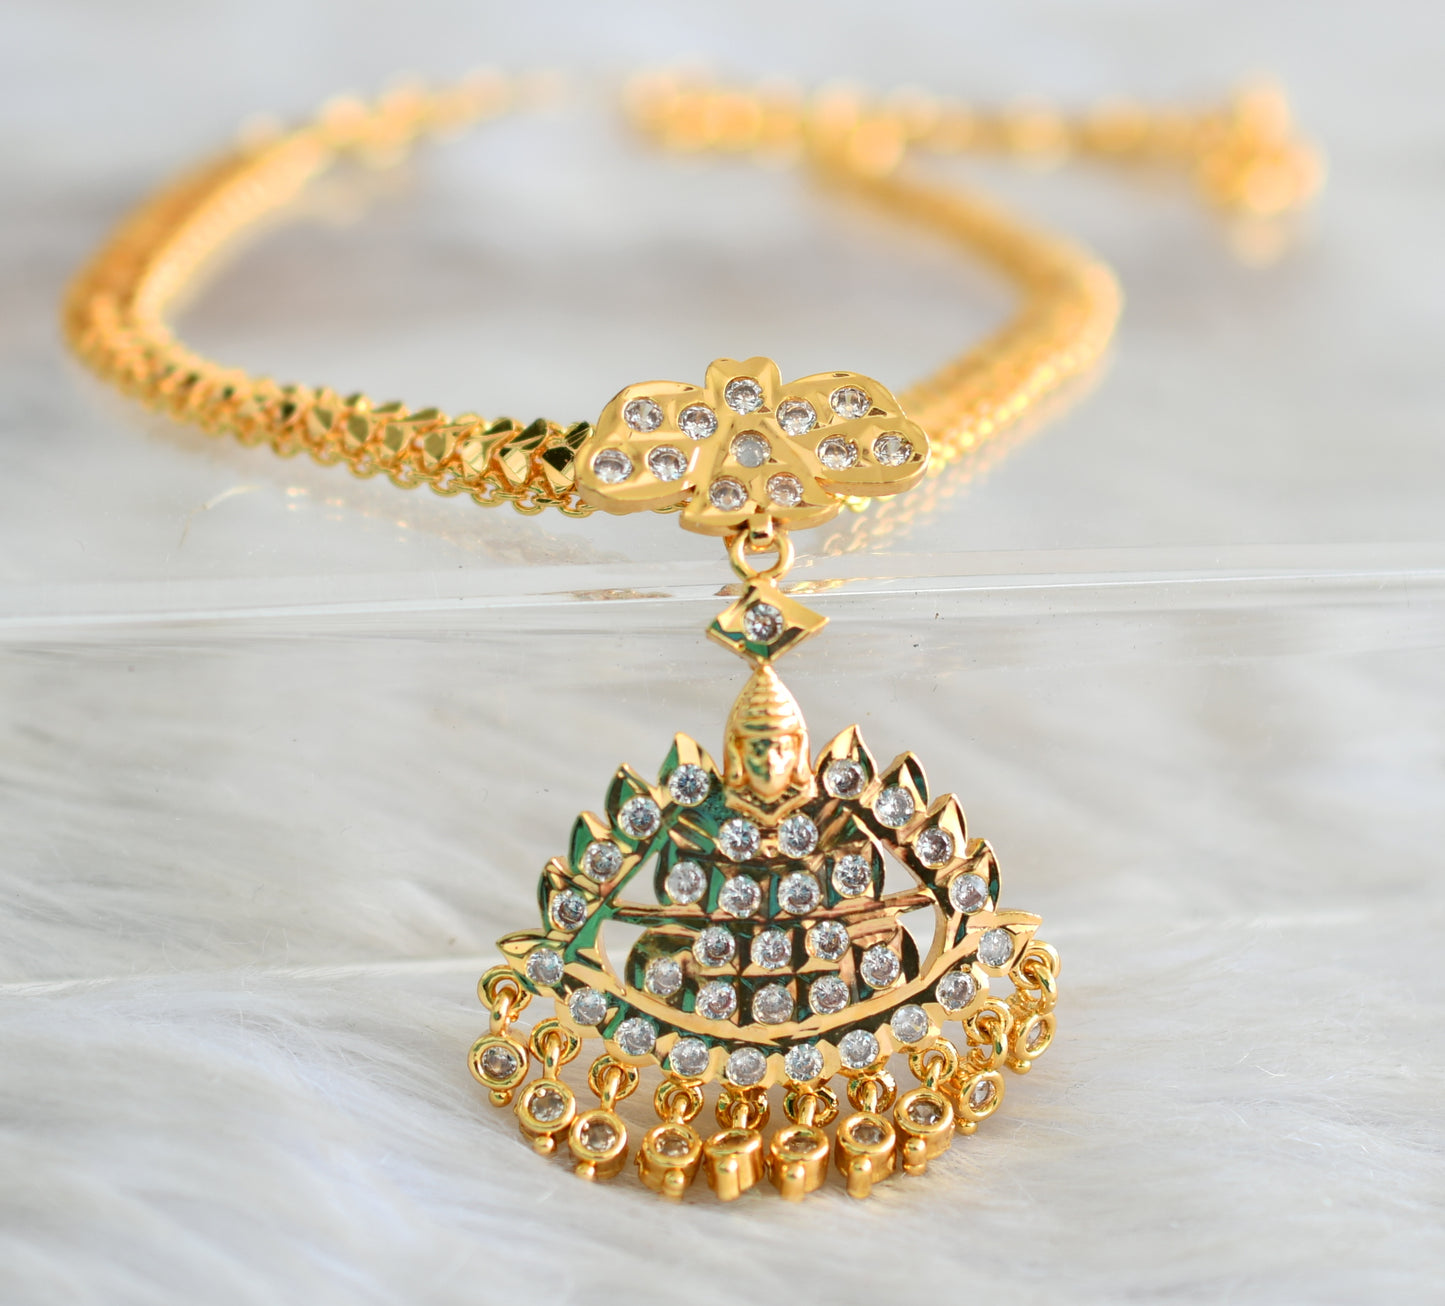 Gold tone South Indian style White Lakshmi attigai/necklace dj-43041